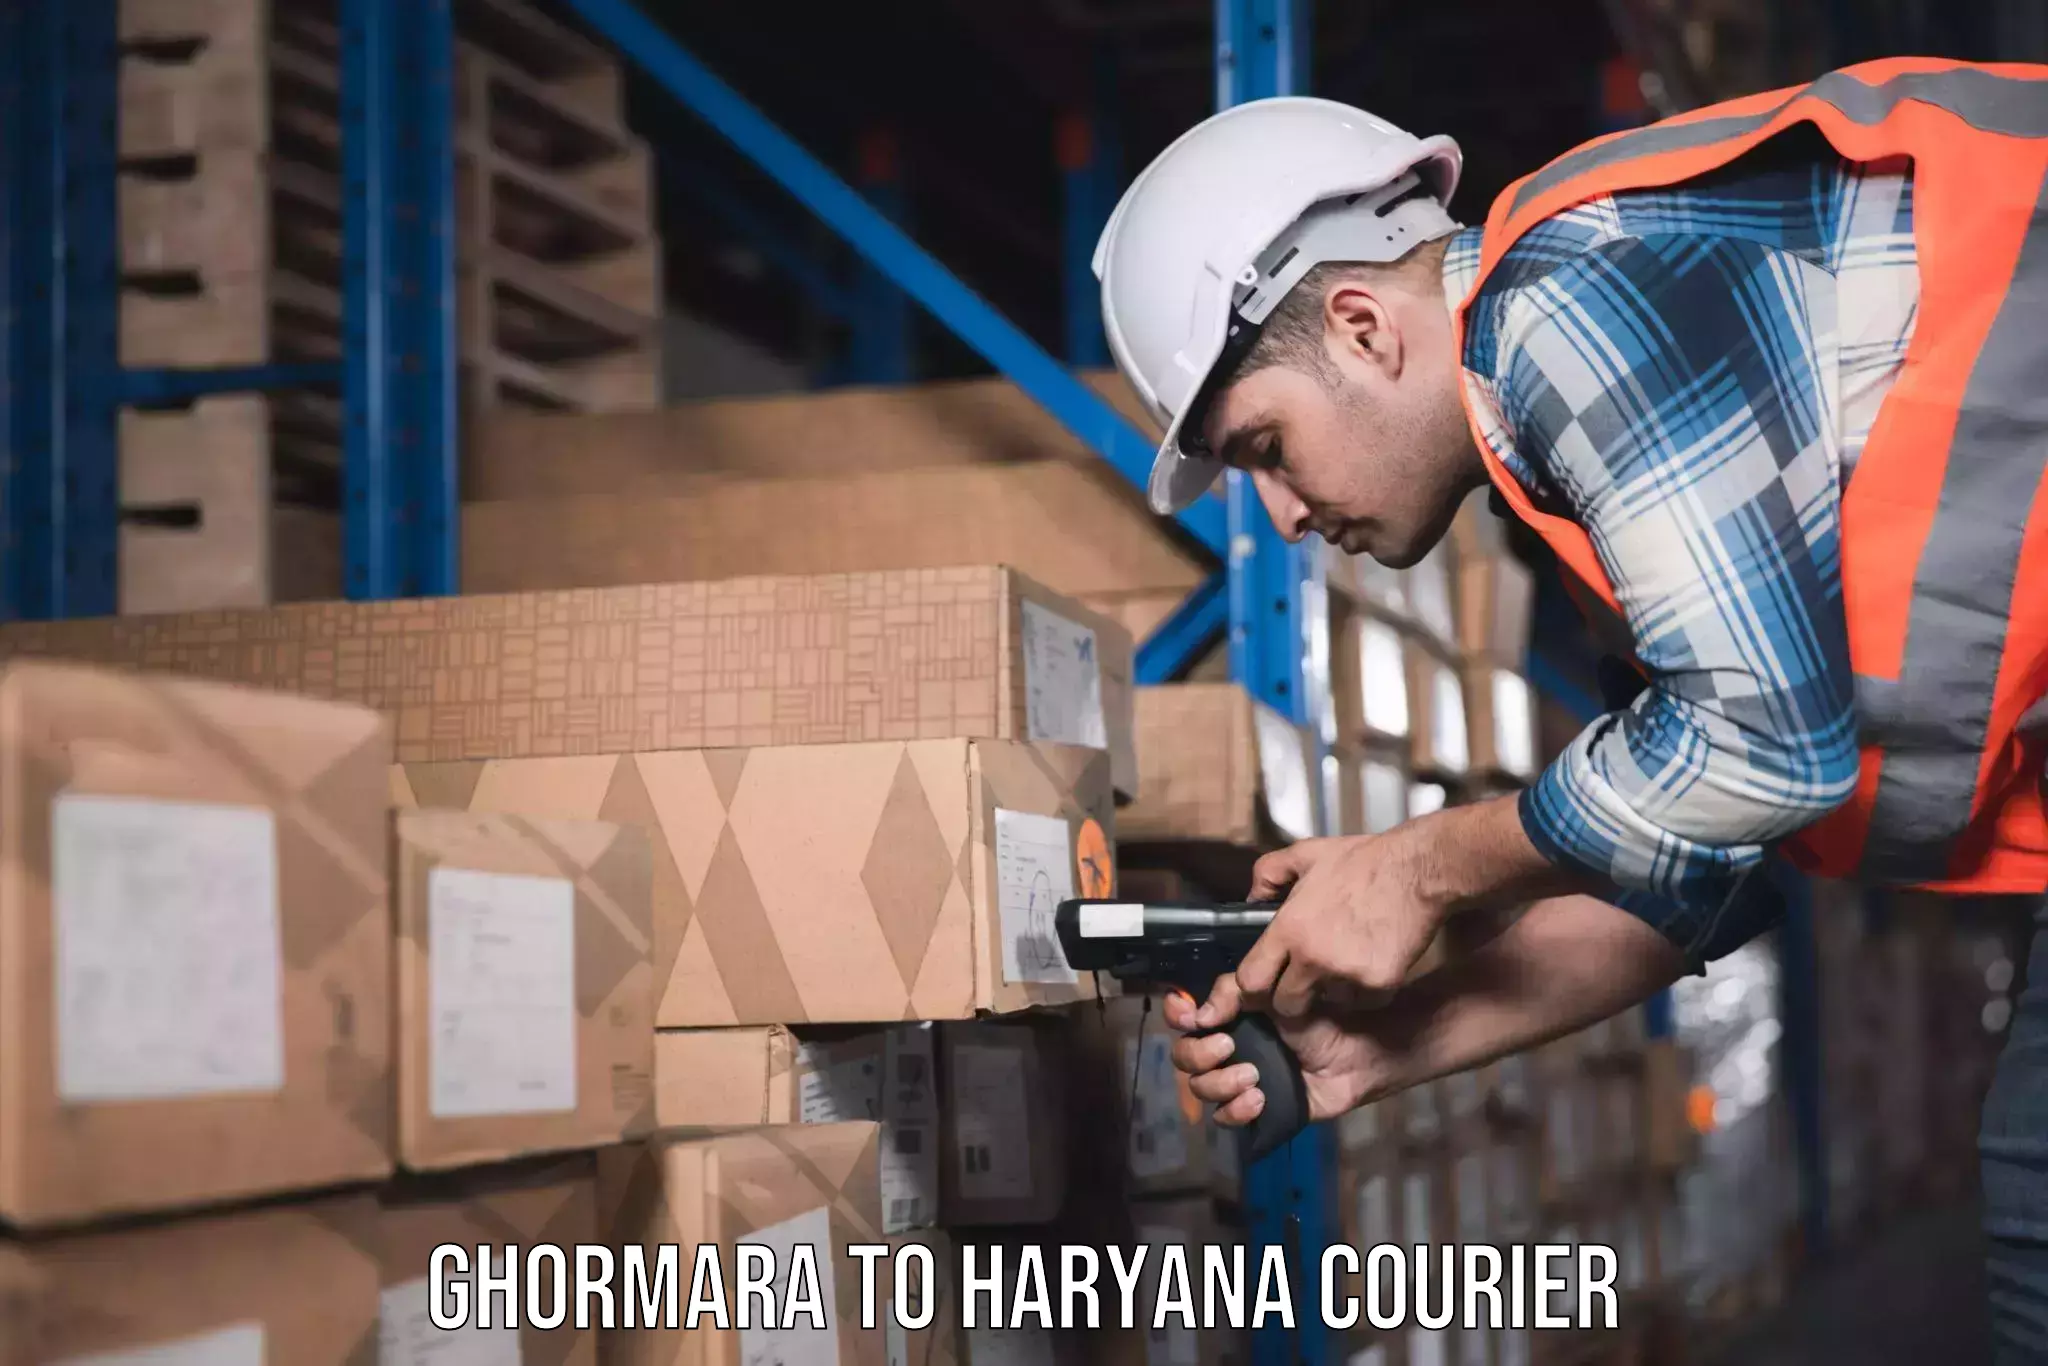 Furniture delivery service Ghormara to Haryana